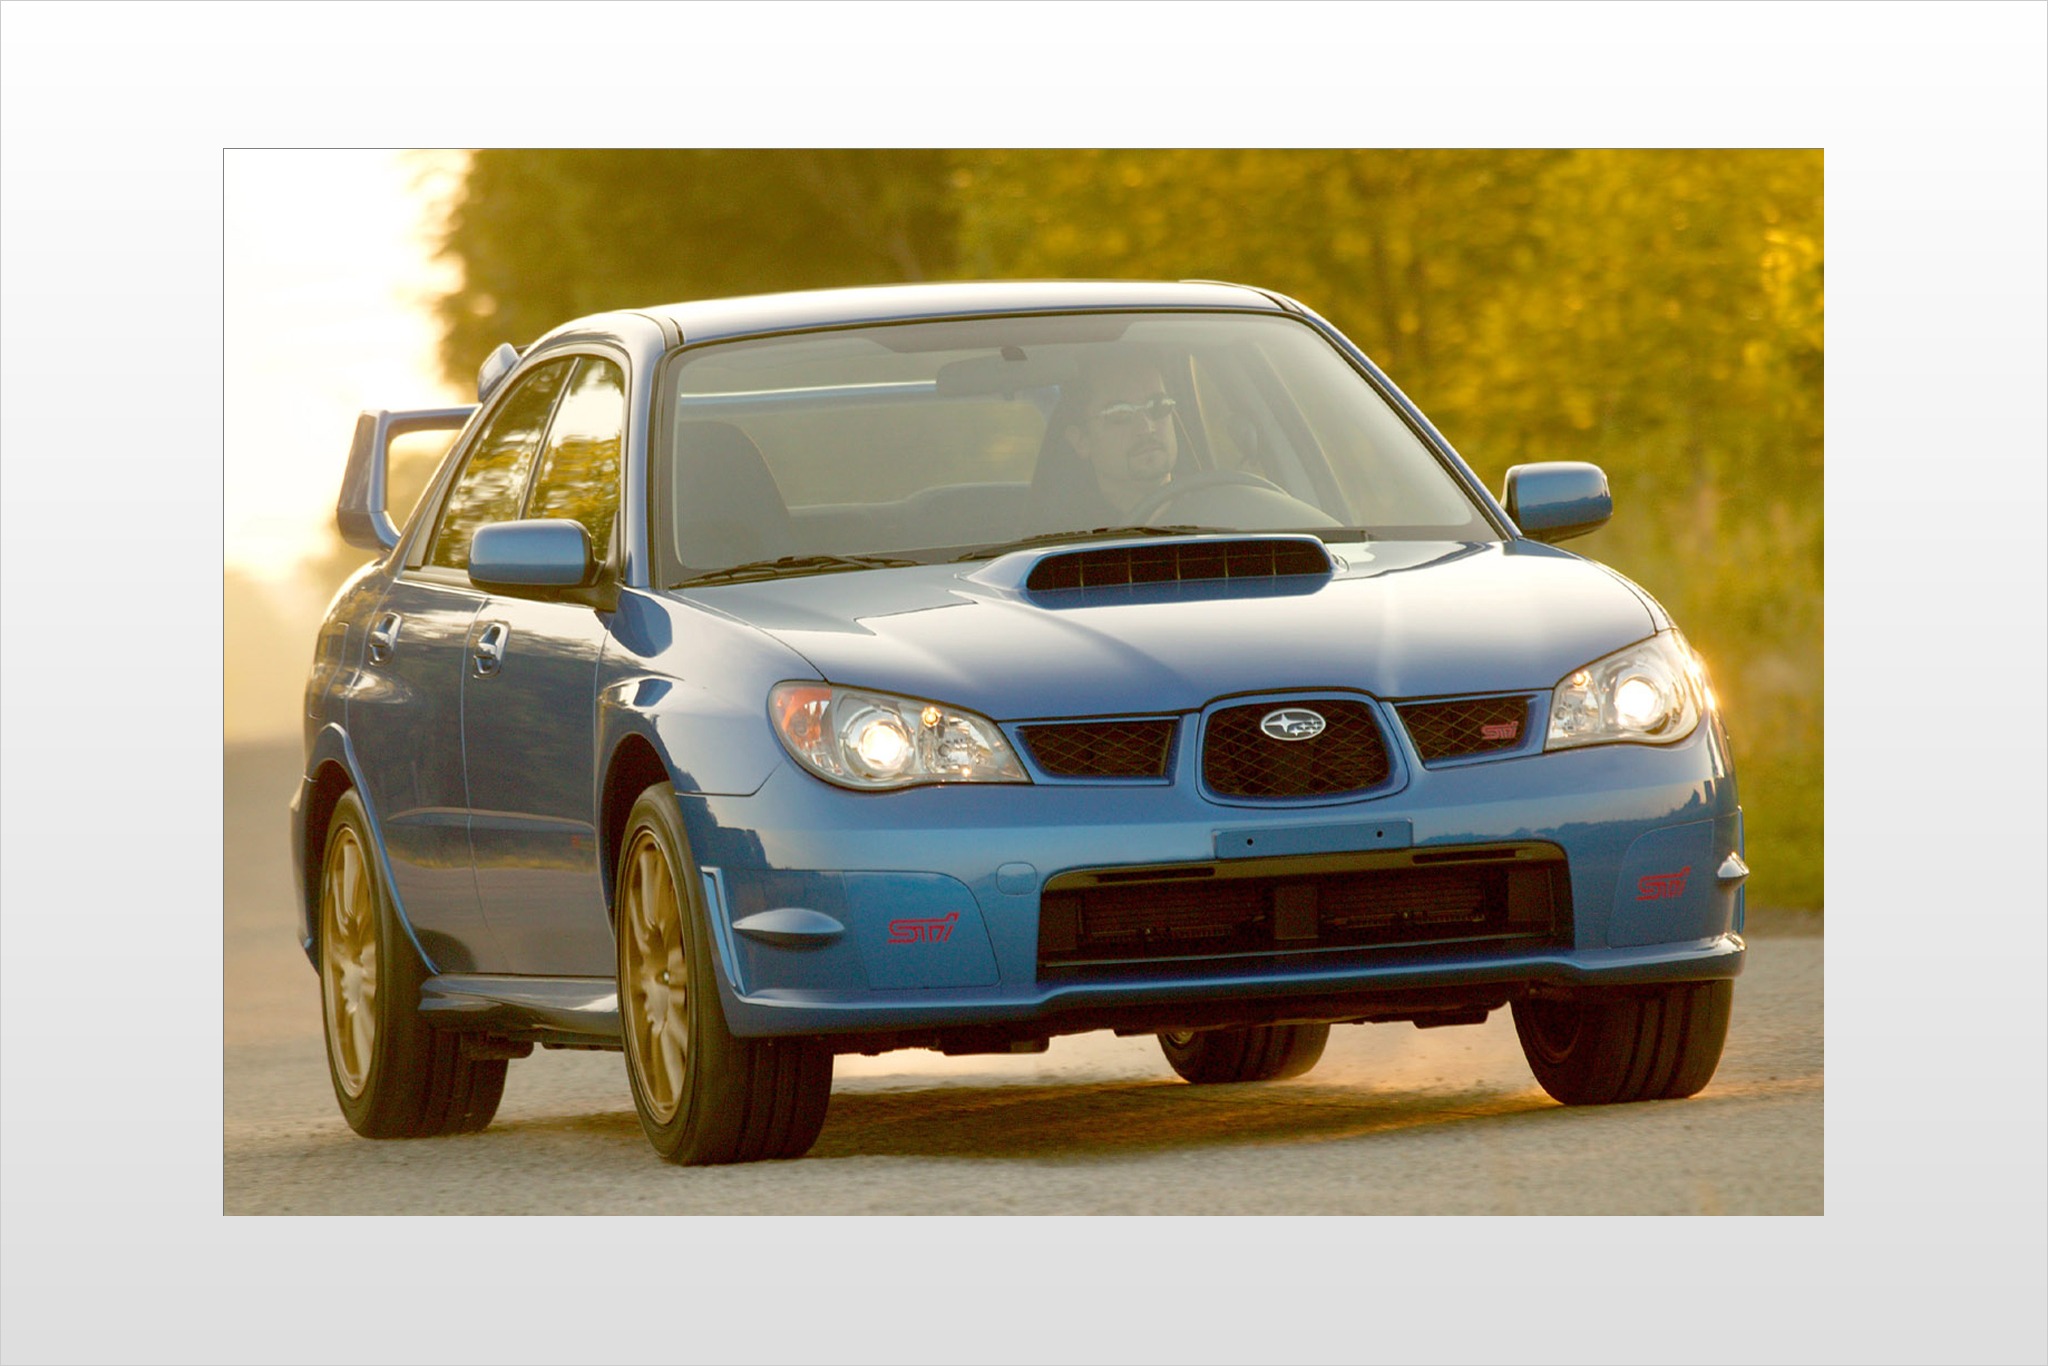 Субару какие модели. Subaru Impreza WRX STI 2006. Субару Impreza WRX STI 2006. Subaru Impreza WRX STI 2005. Subaru WRX STI 2005.